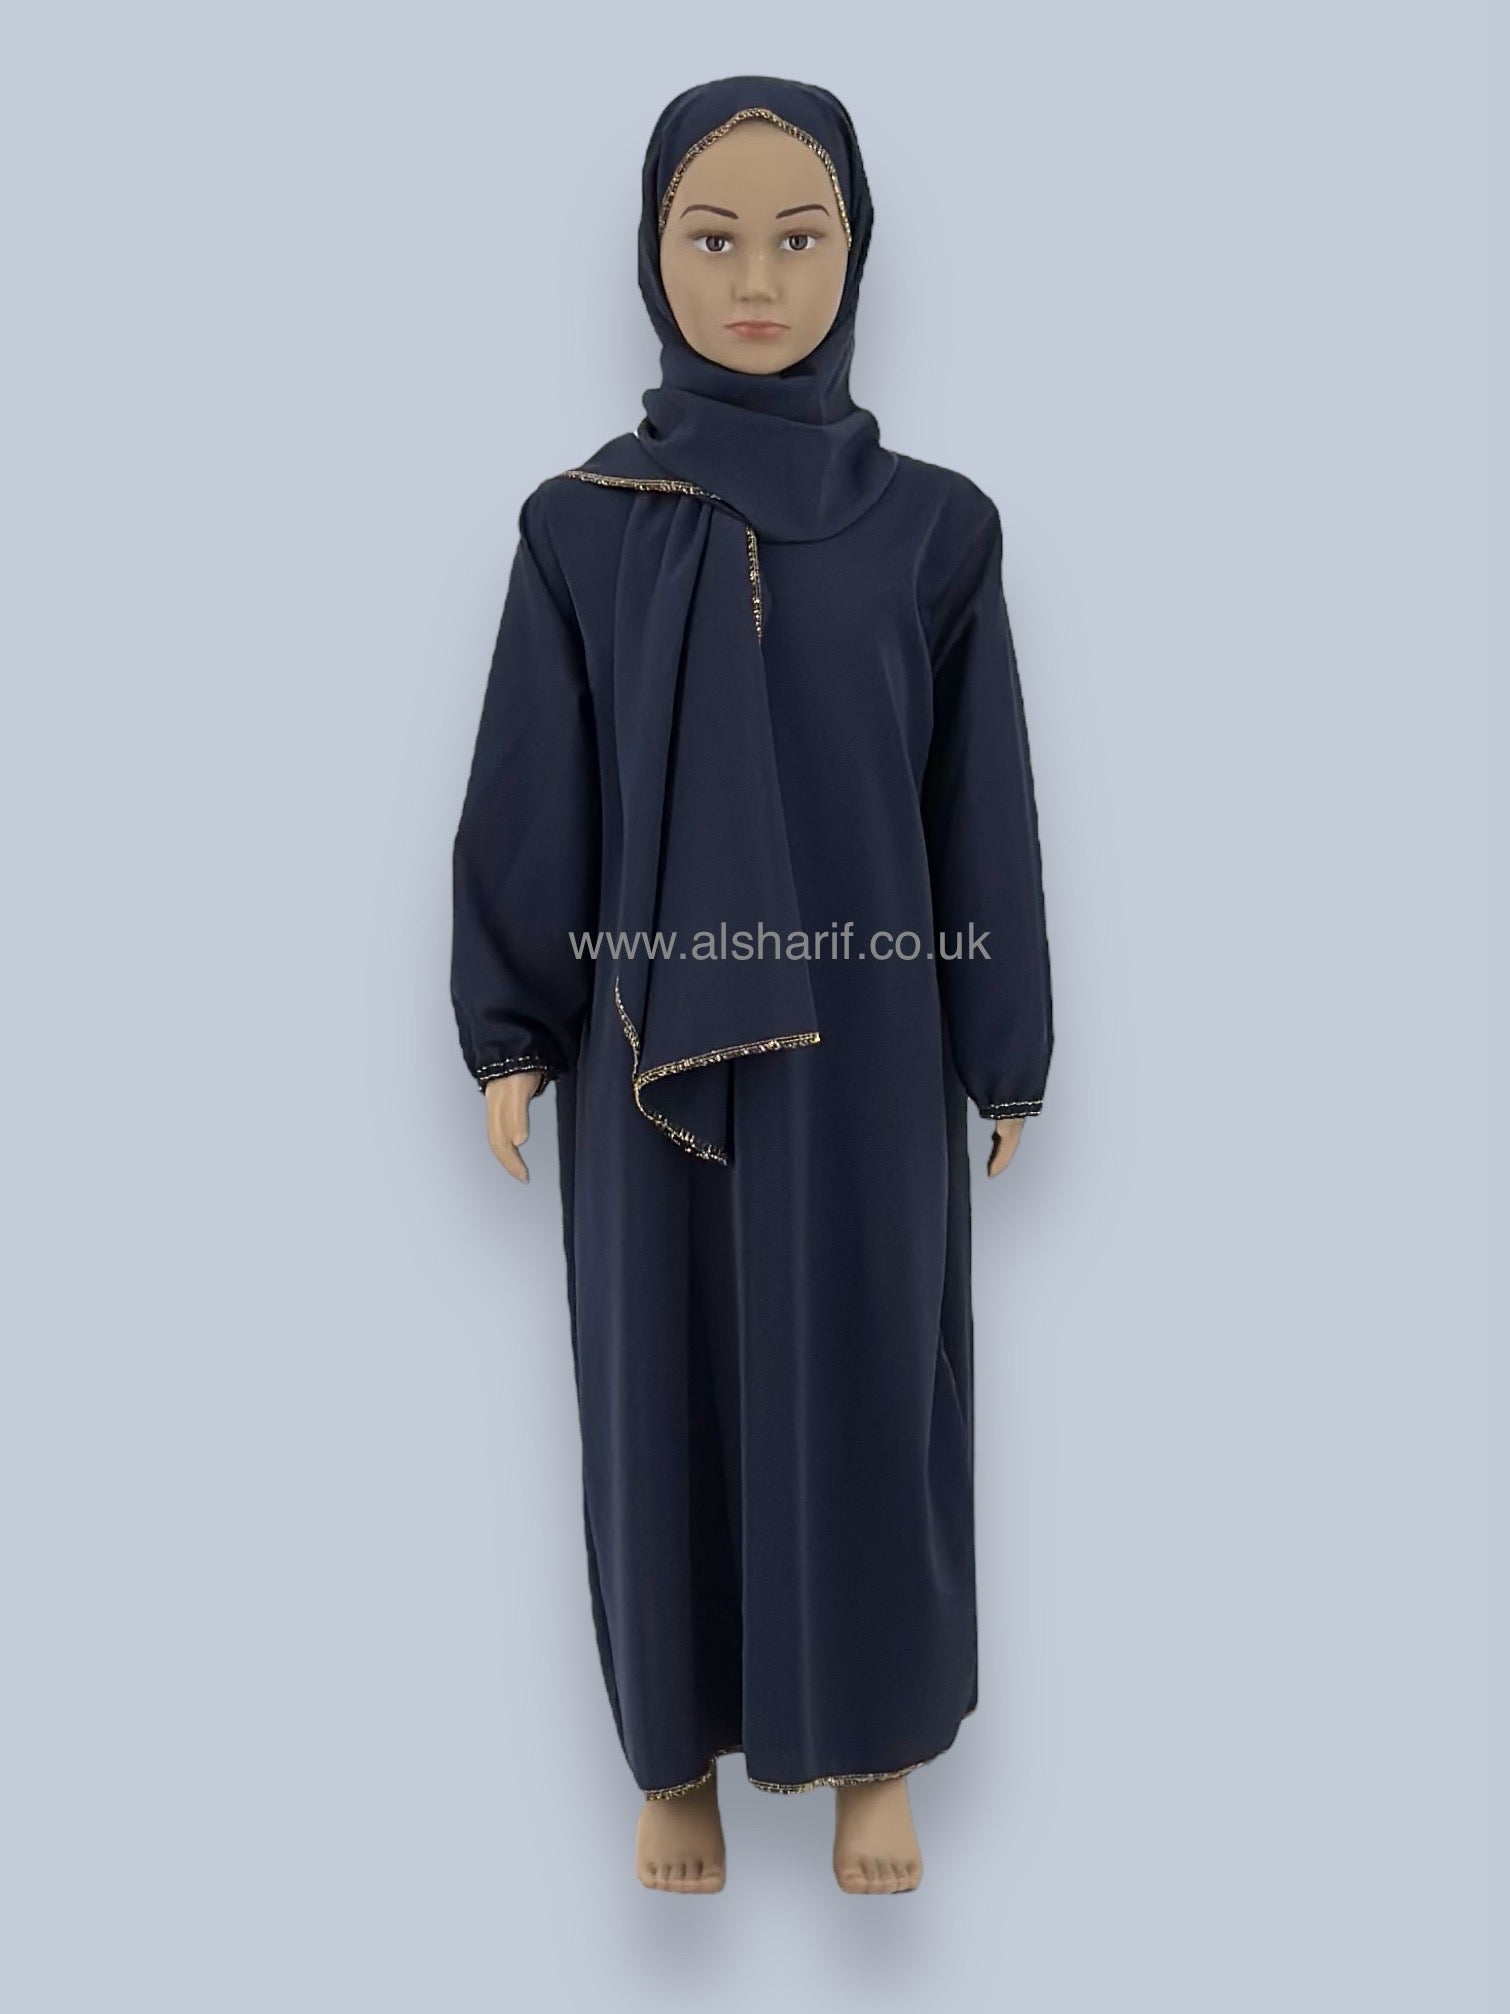 Girls Nida Silky Abaya Jilbab With Attached Hijab - GA91 (Navy Blue)